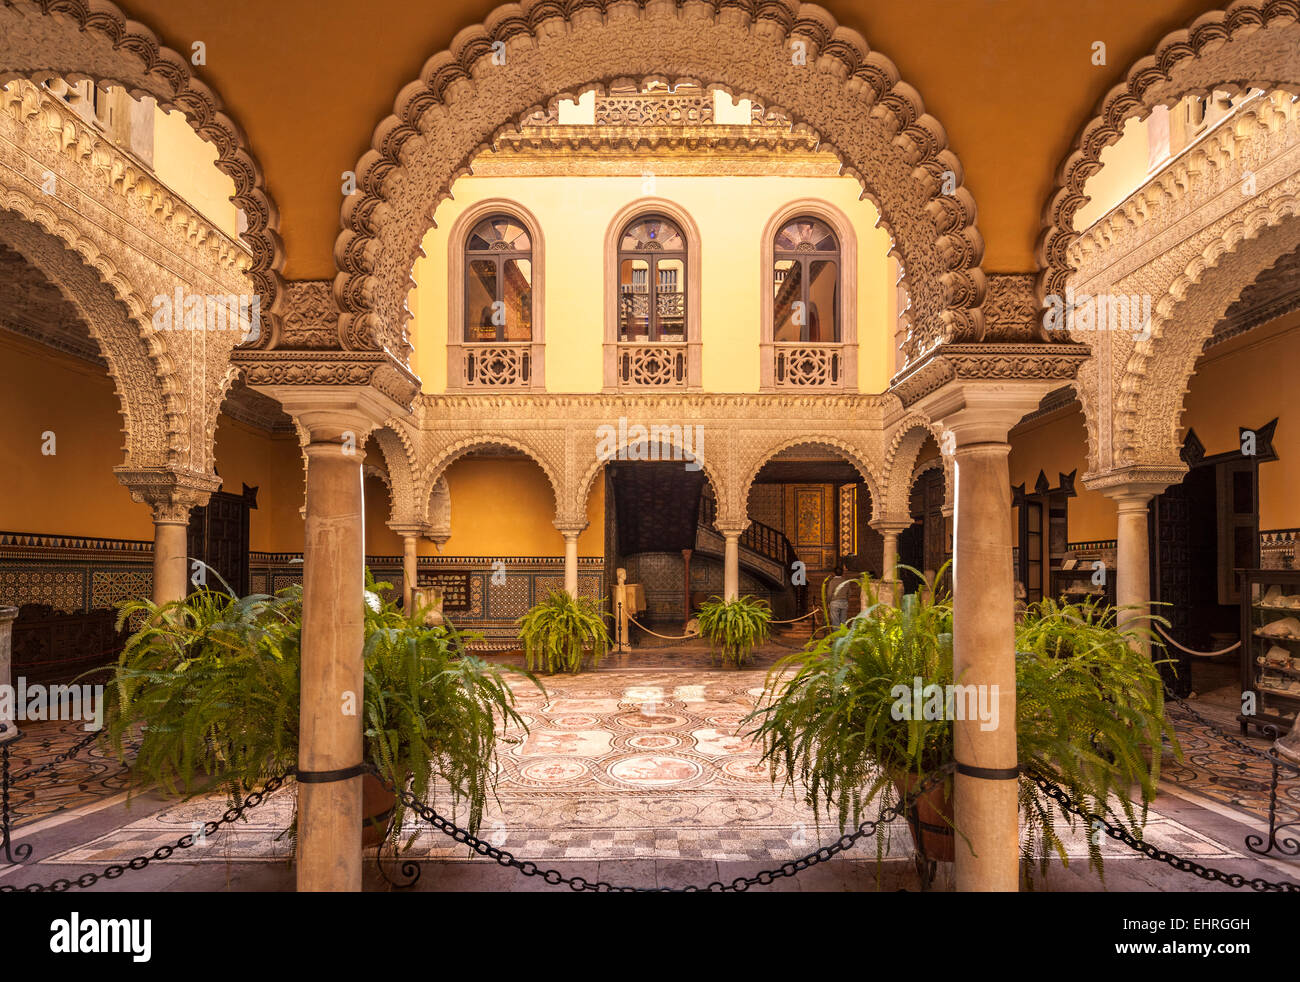 Sevilla Spanien, Innenhof mit römischen Mosaiken. Sevilla, Palast der Gräfin von Lebrija, Palacio De La Condesa de Lebrija. Stockfoto